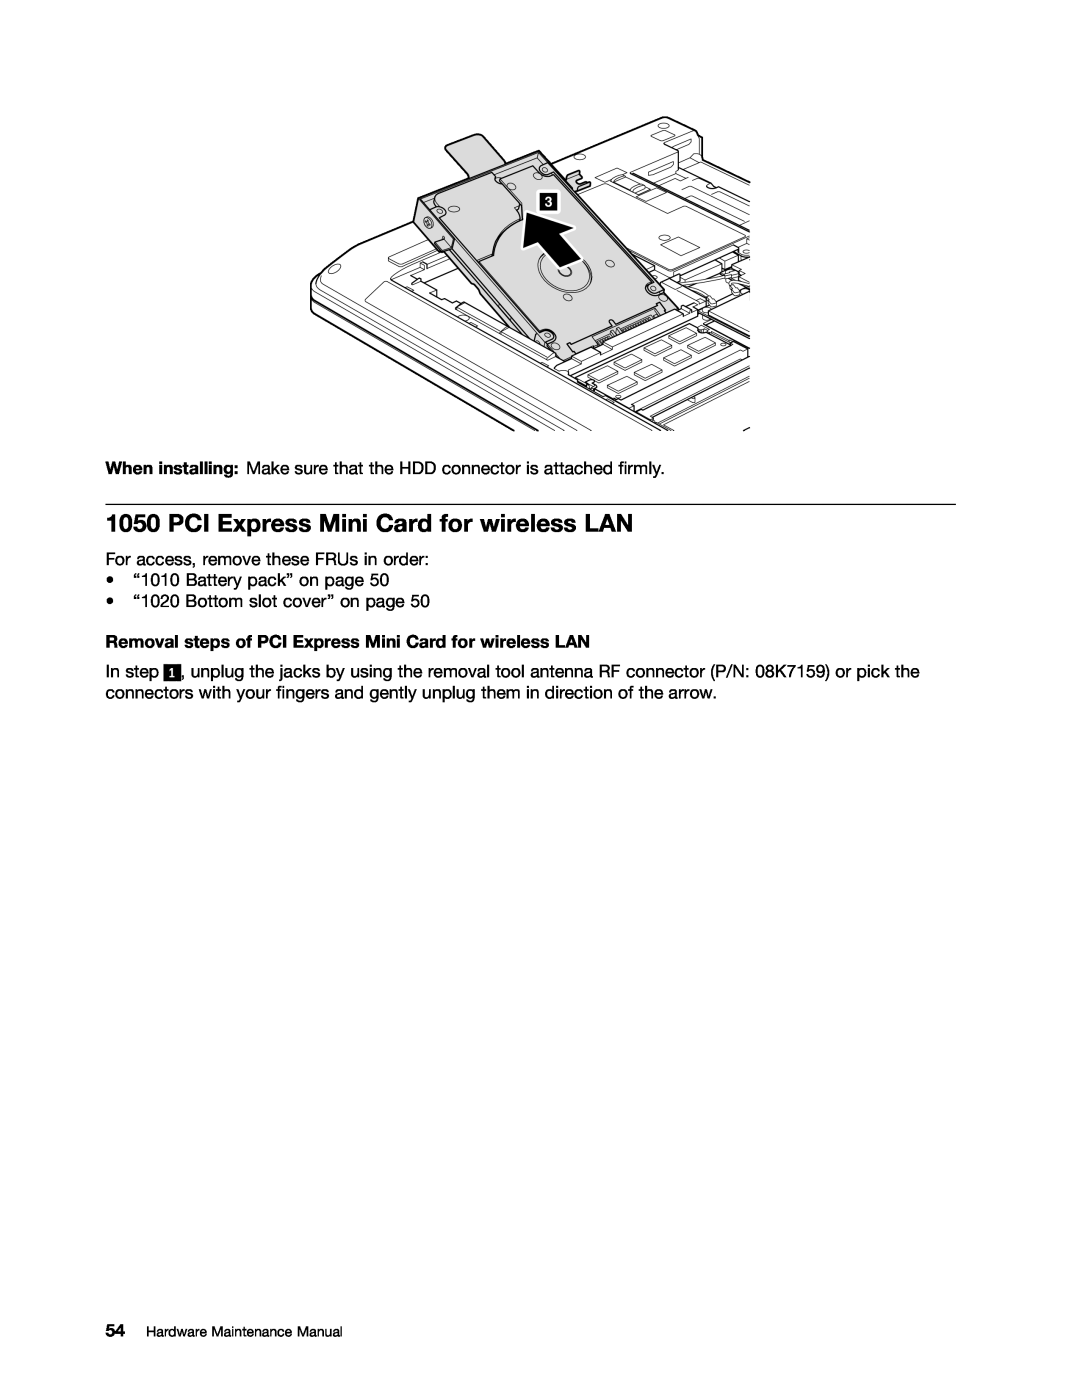 Lenovo E31, E30, EDGE 13 manual Removal steps of PCI Express Mini Card for wireless LAN 